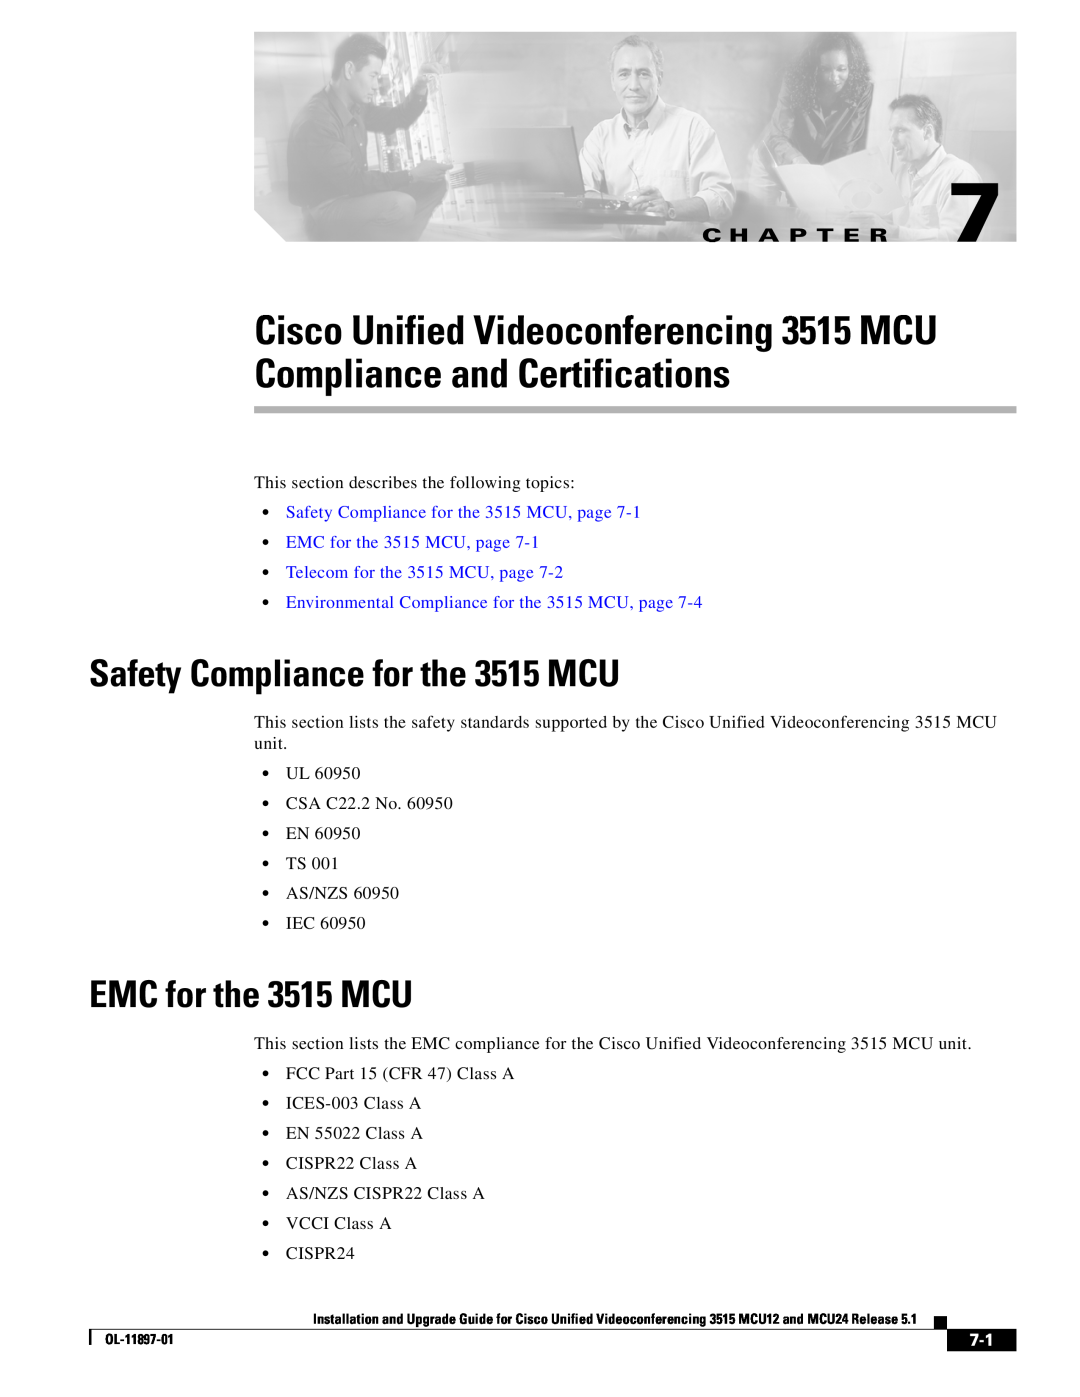 Cisco Systems MCU24 Compliance and Certifications, Safety Compliance for the 3515 MCU, EMC for the 3515 MCU, C H A P T E R 